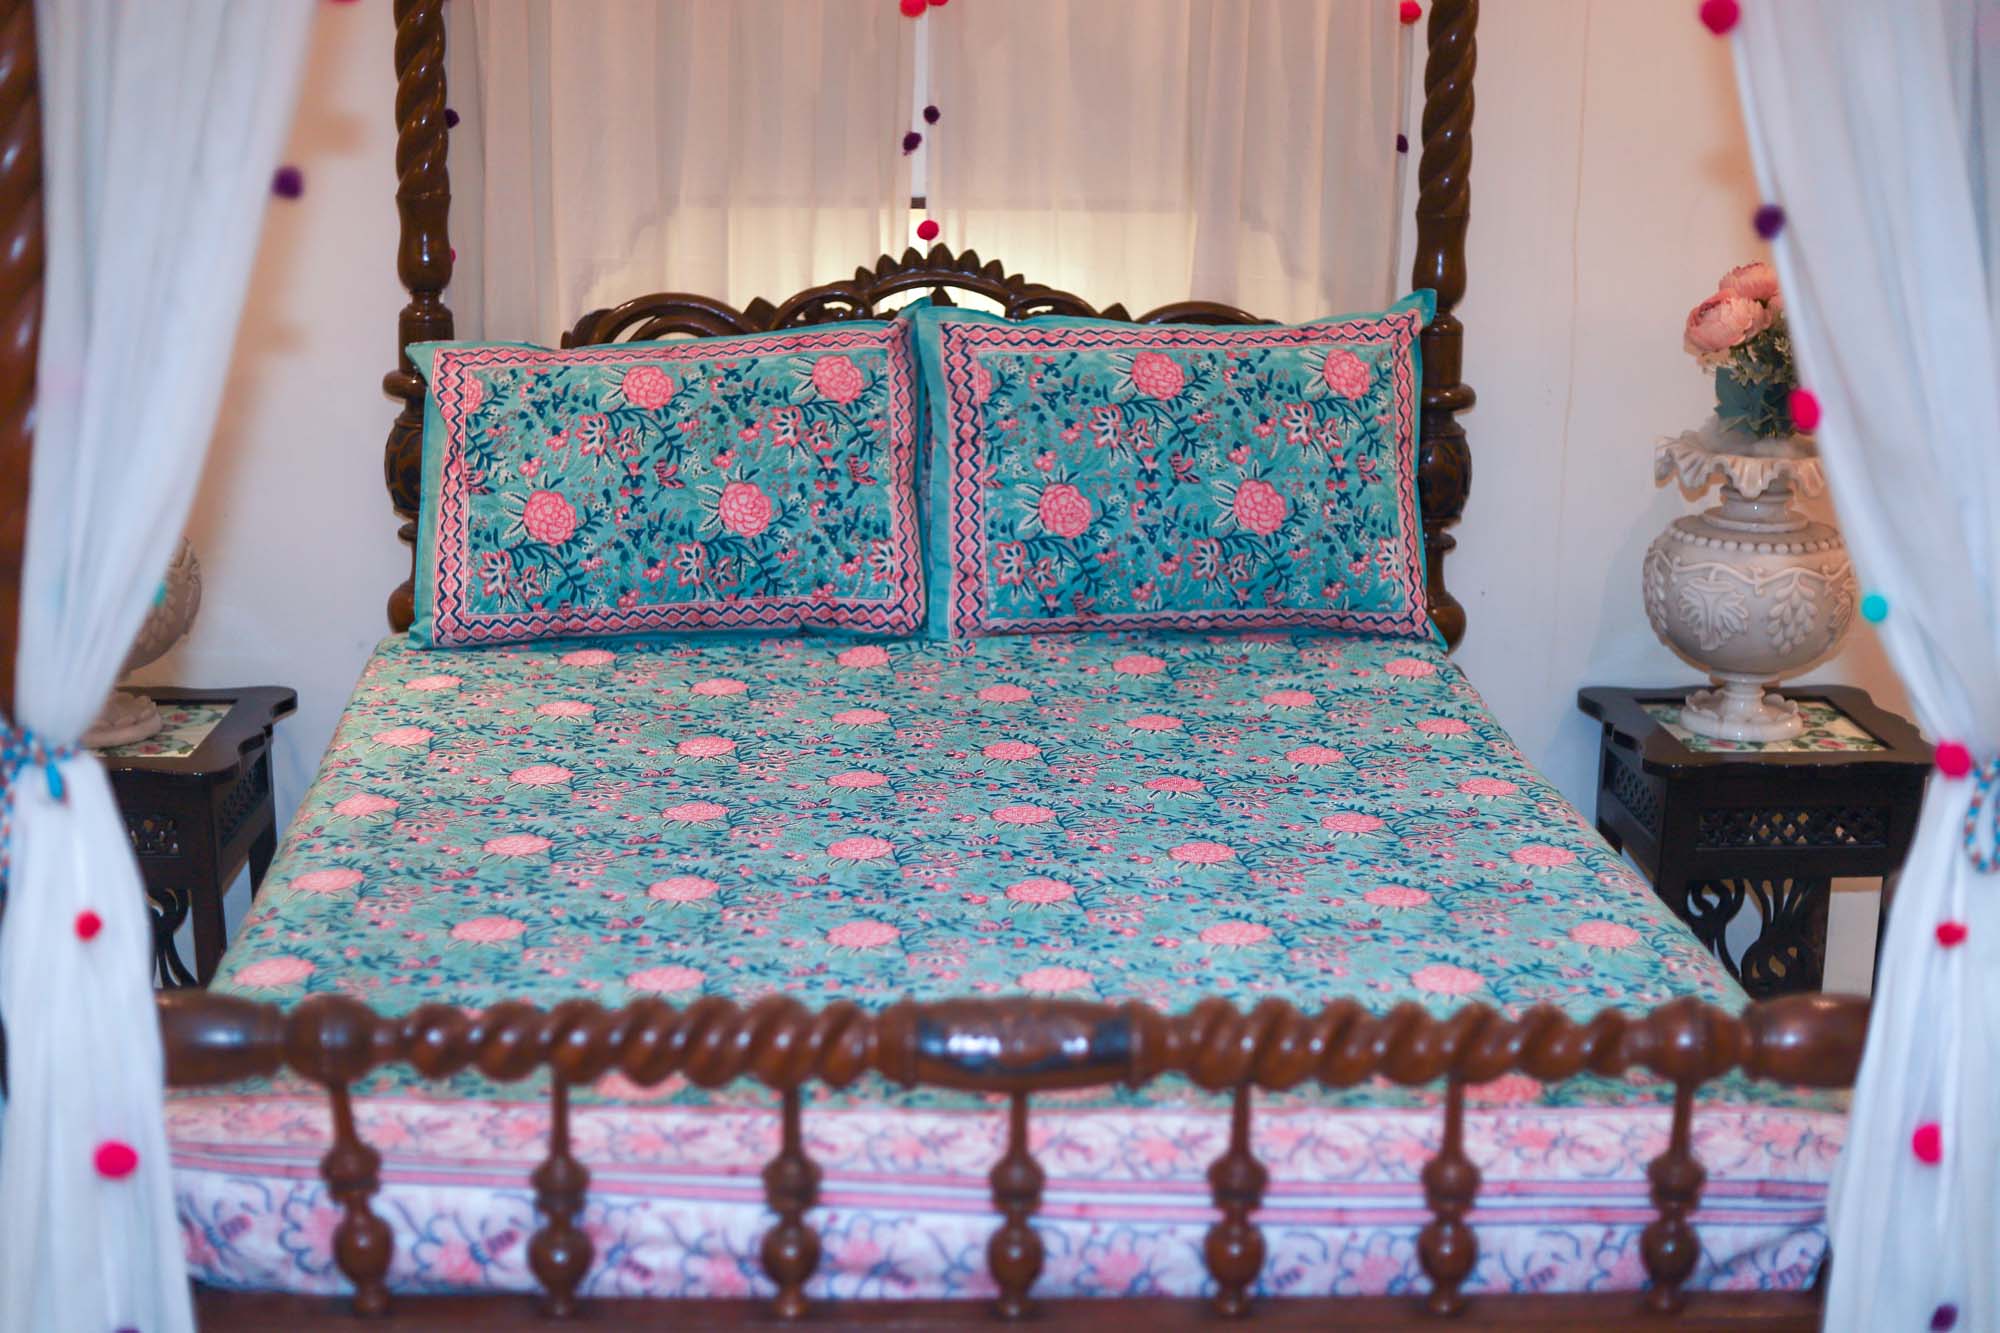 Rose Garden Bed Sheet With Pillow